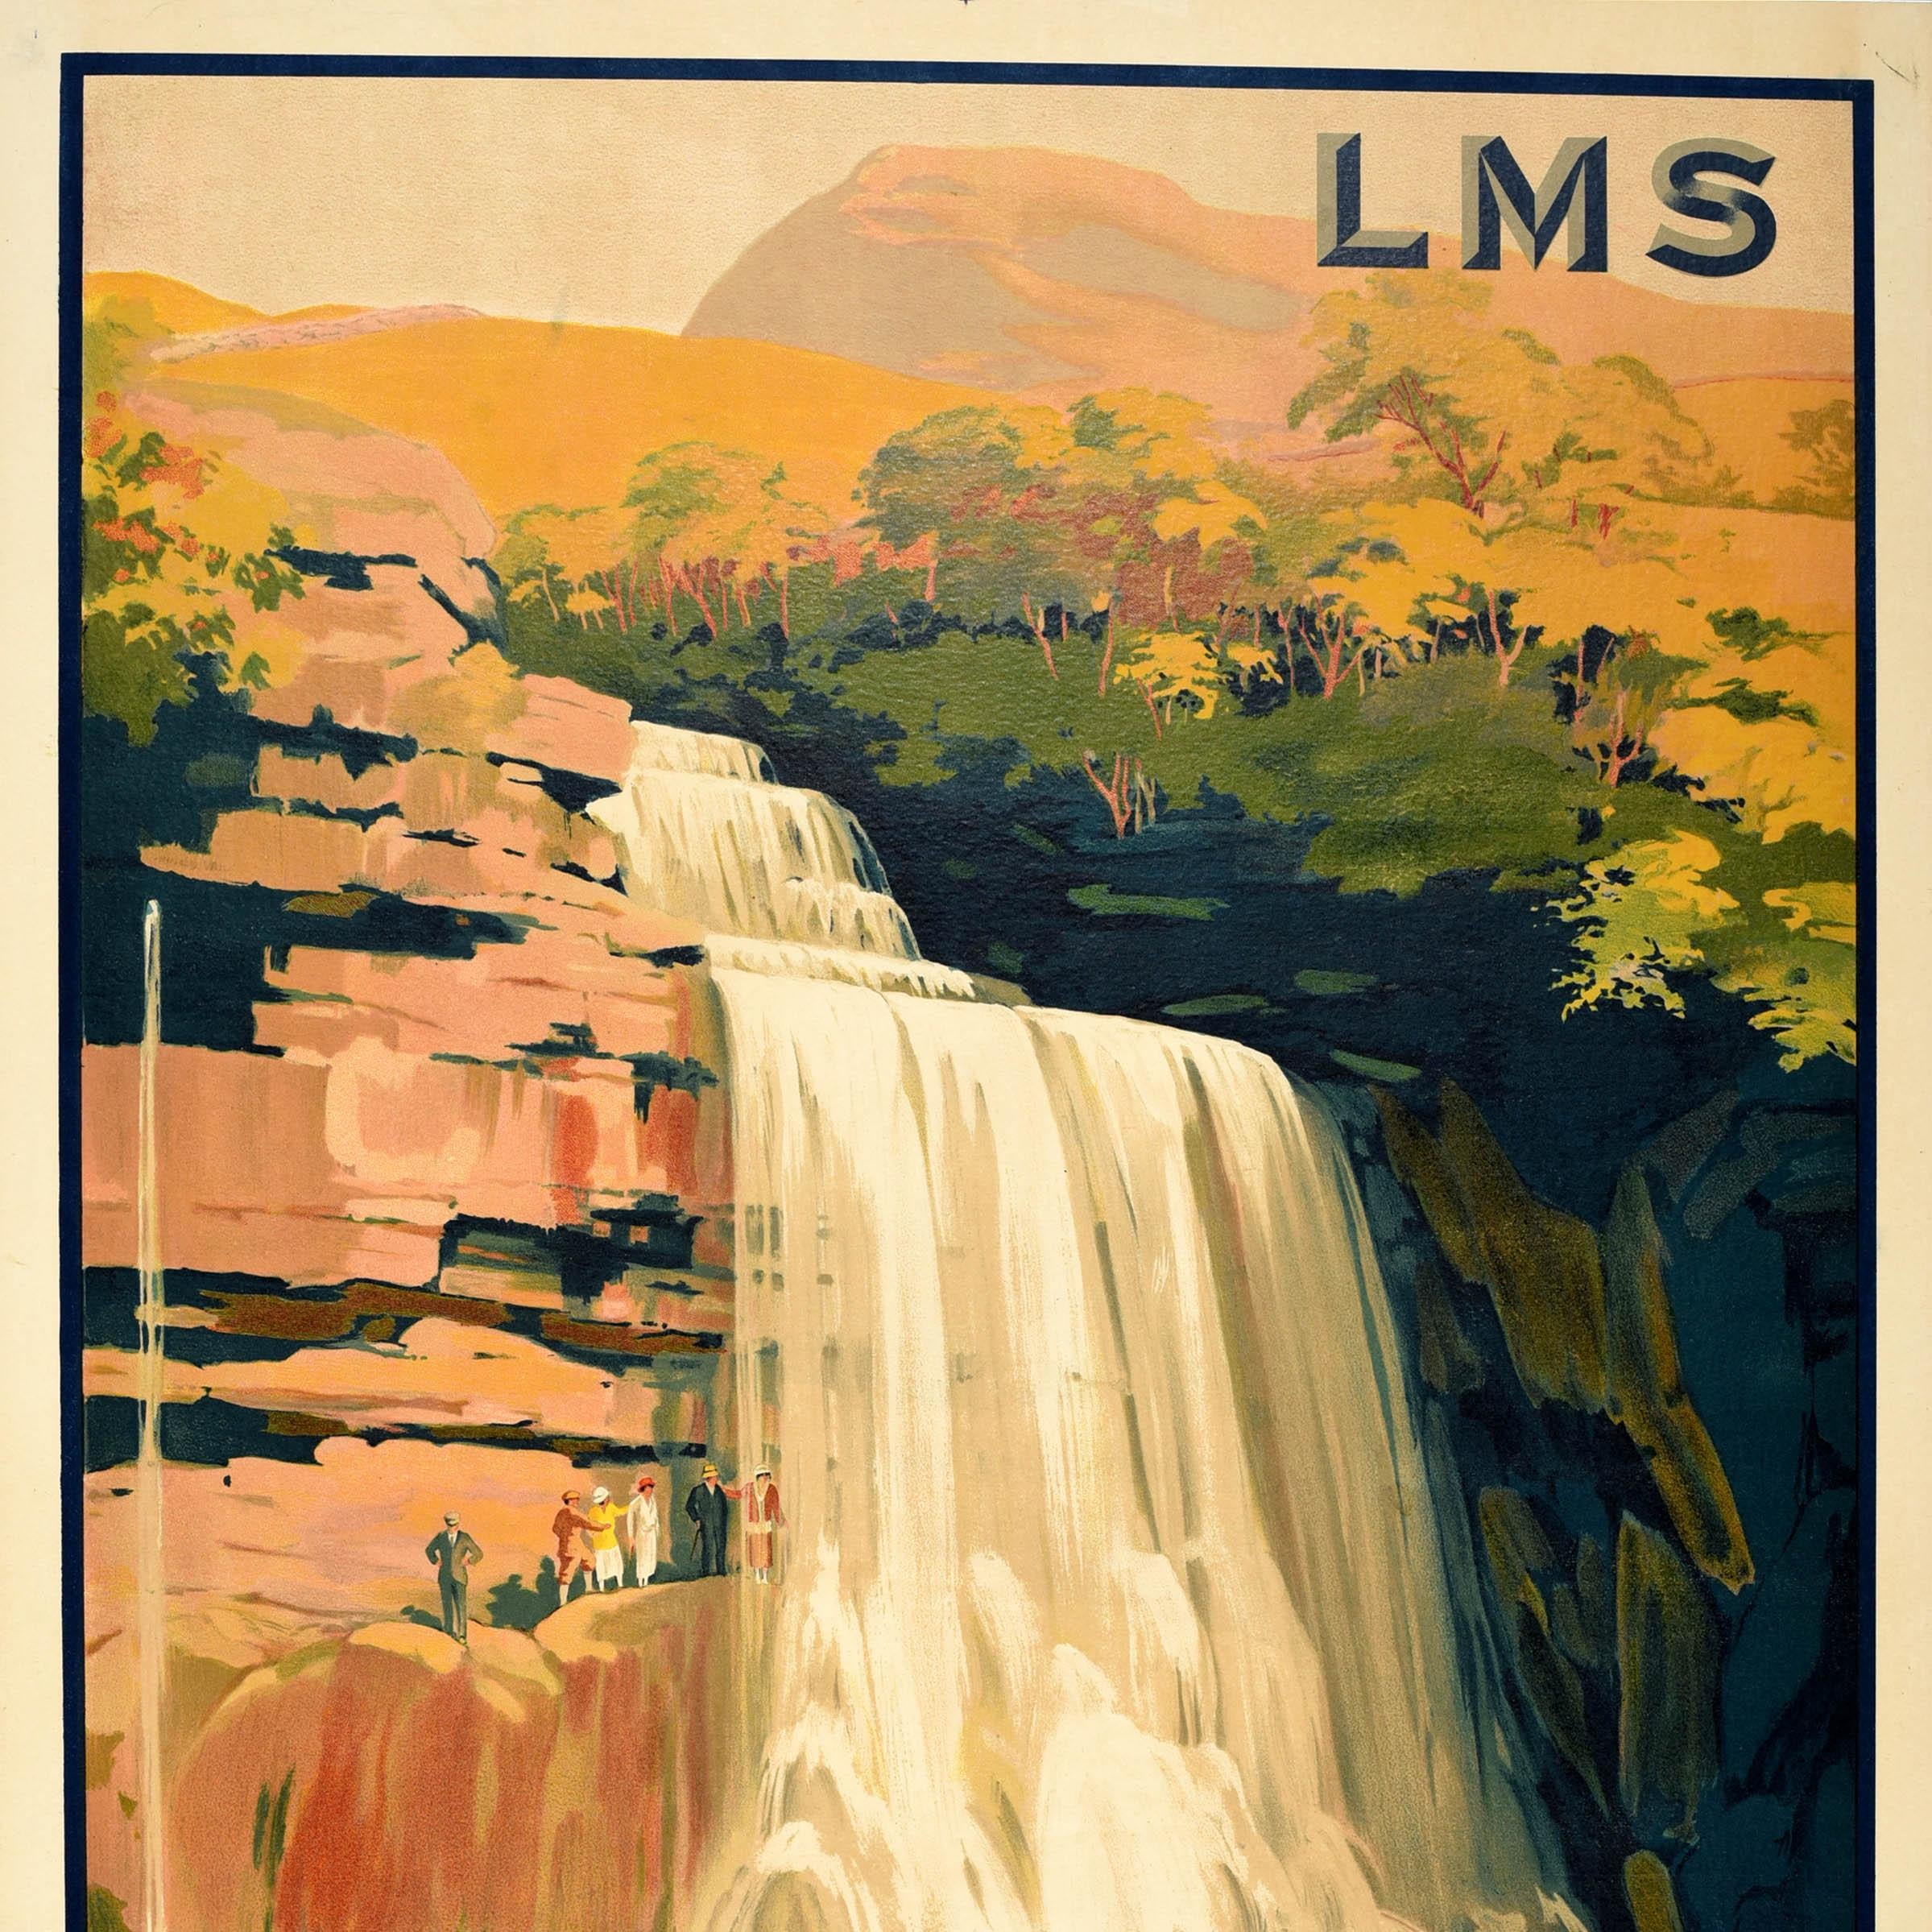 British Original Vintage Railway Travel Poster Ingleton Land Of Waterfalls LMS Whatley For Sale